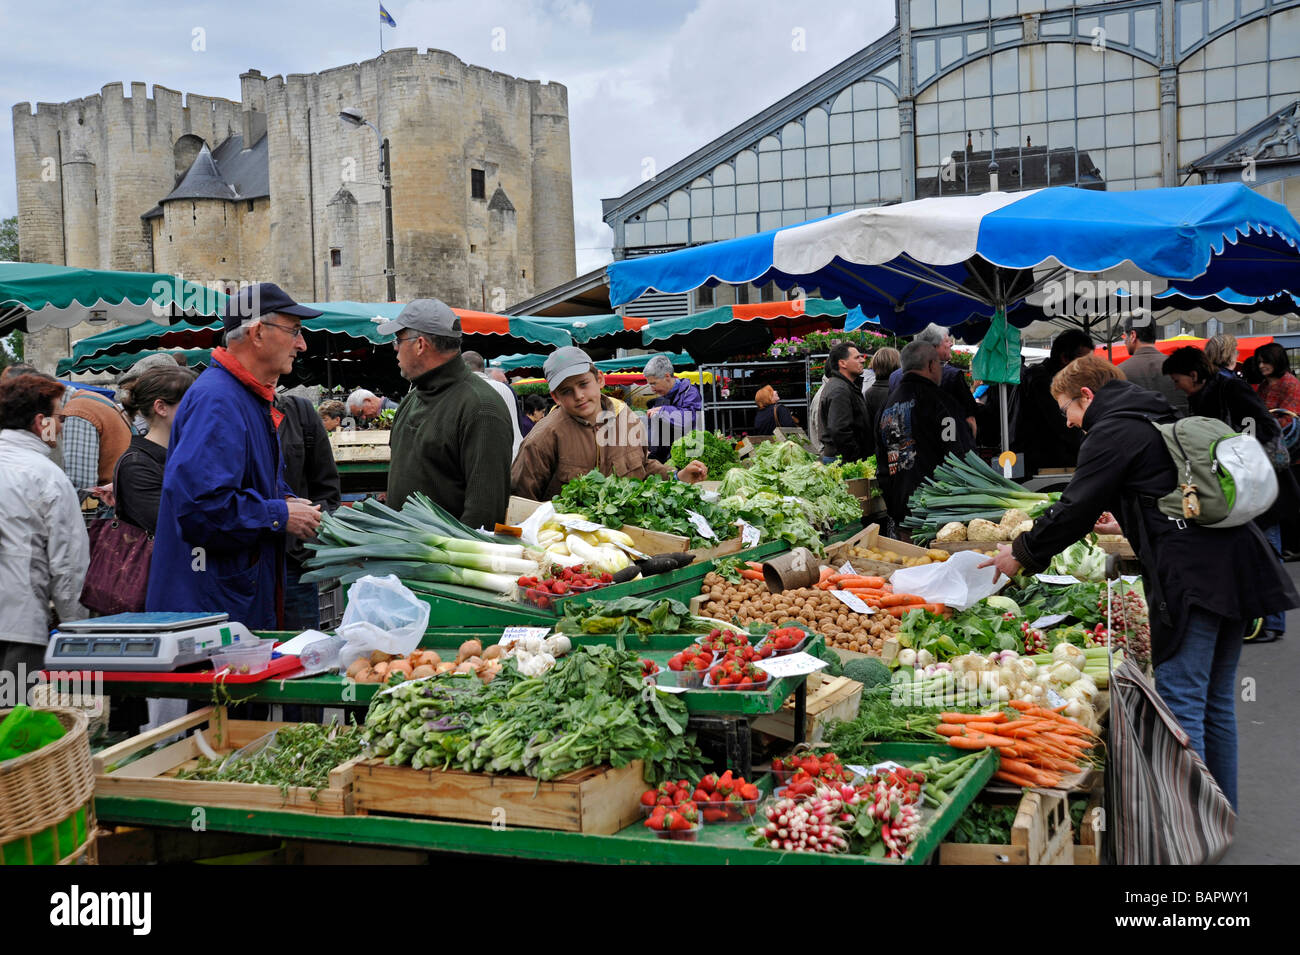 Market day at Niort town, France Stock Photo